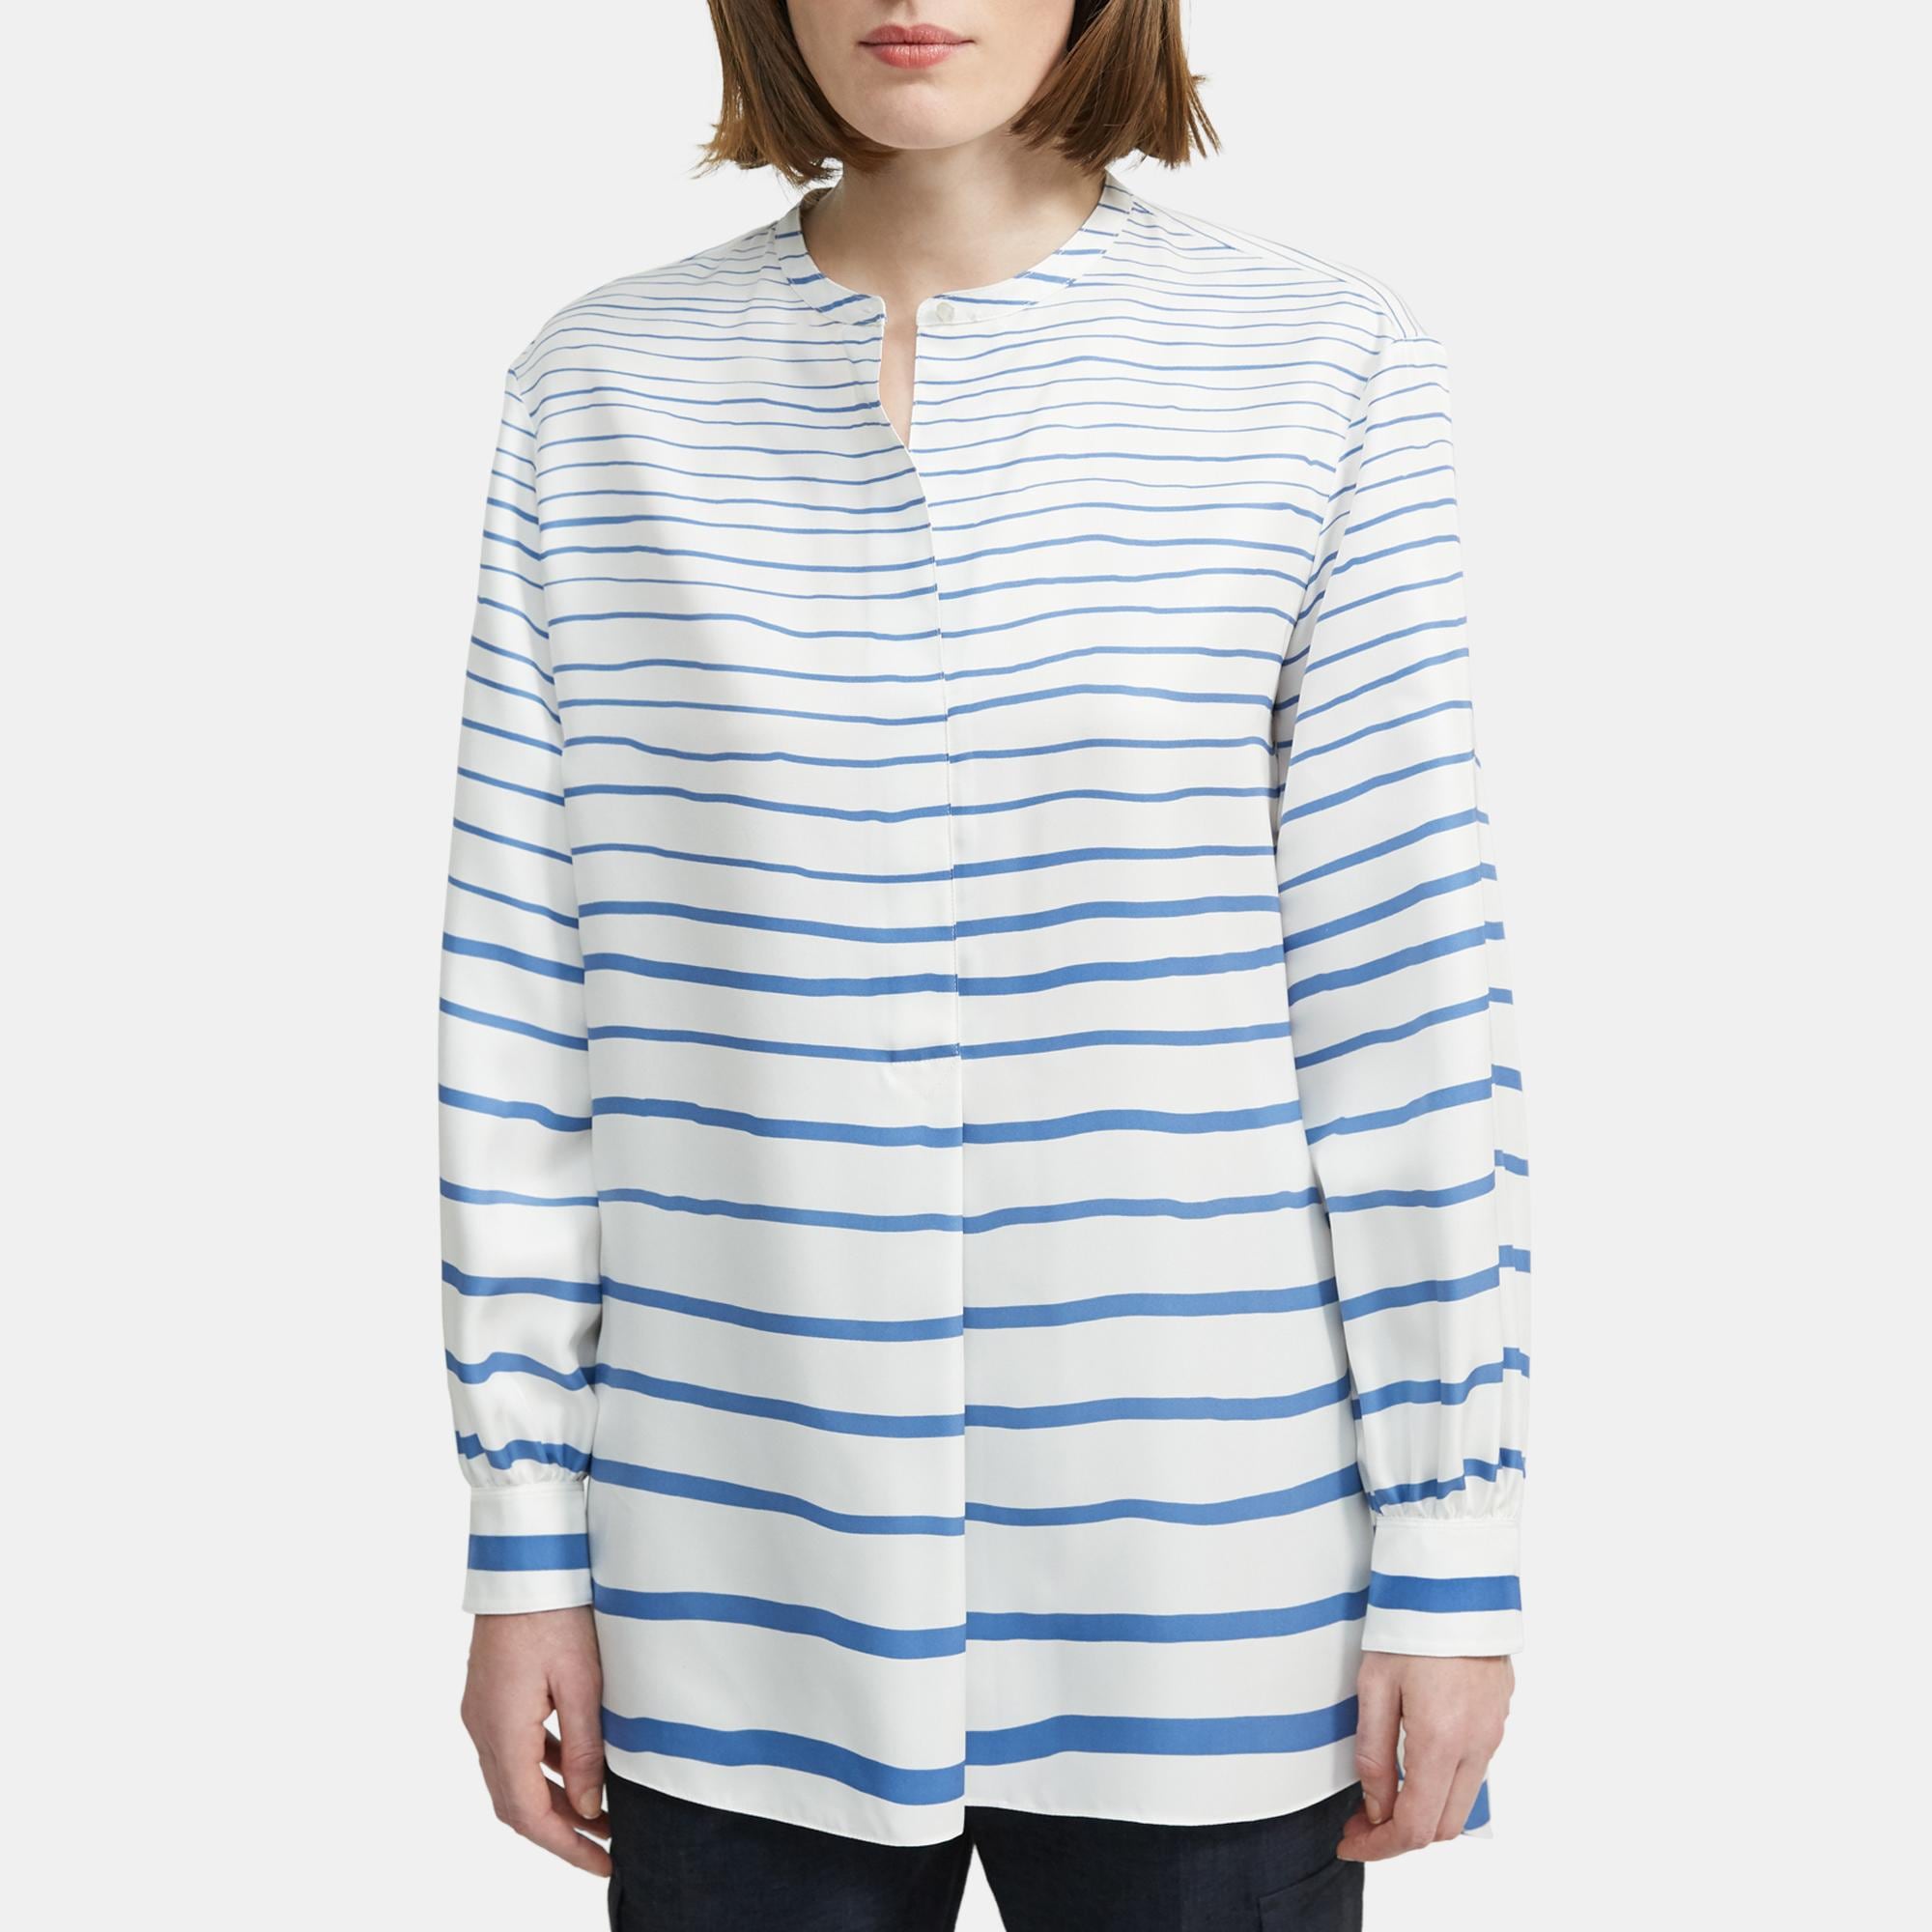 Theory Popover Tunic in Striped Silk